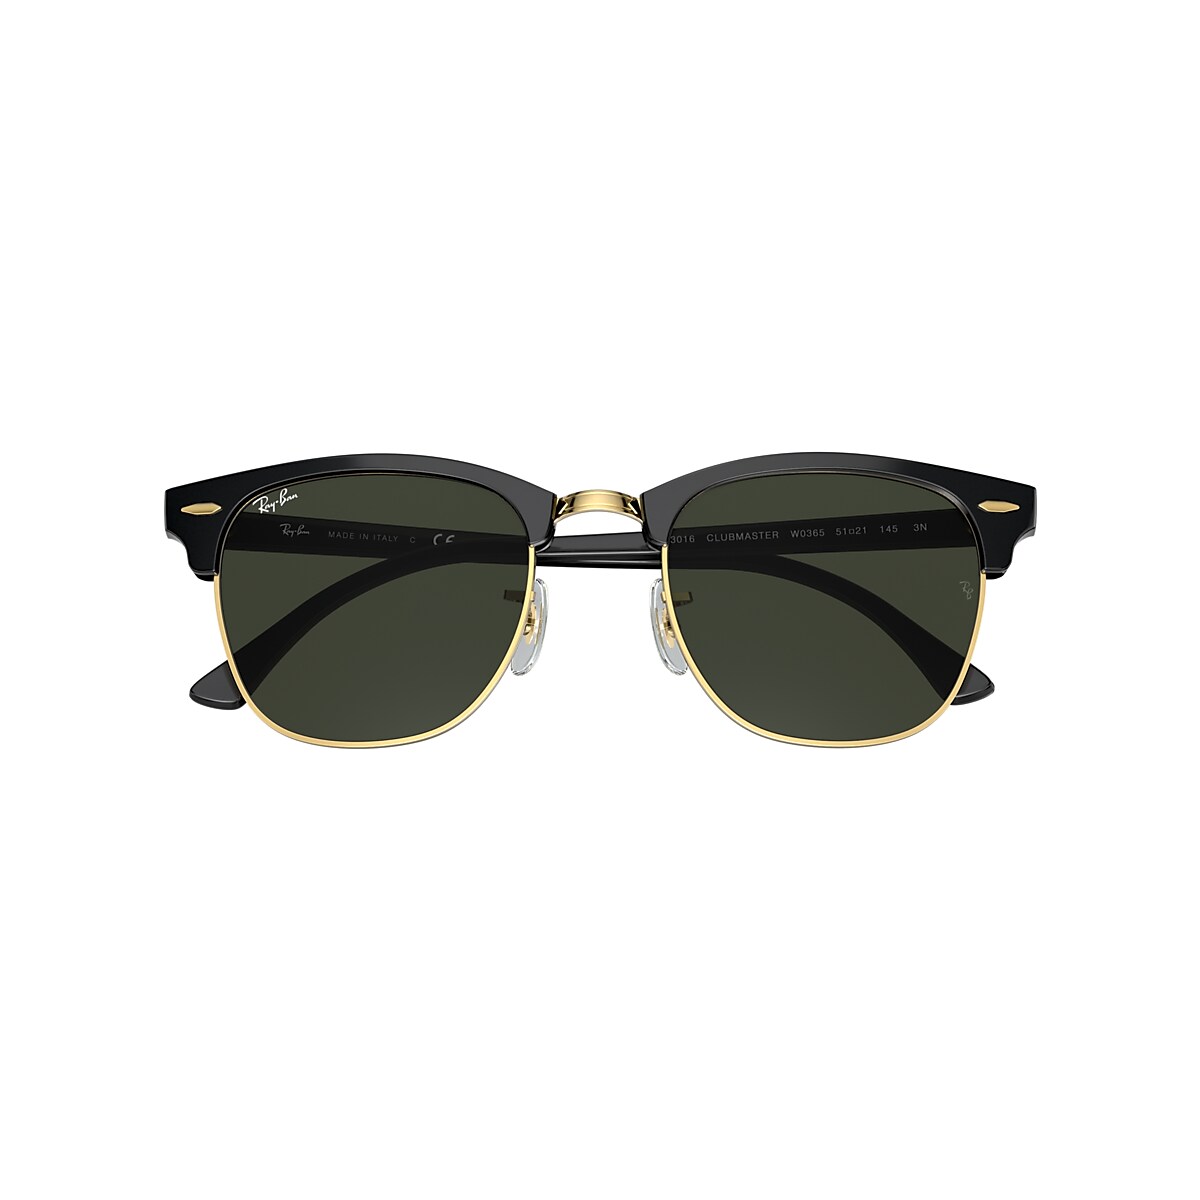 Ventileren Ventileren apotheker Ray-Ban RB3016 Clubmaster Classic 51 Green & Black On Gold Sunglasses |  Sunglass Hut USA